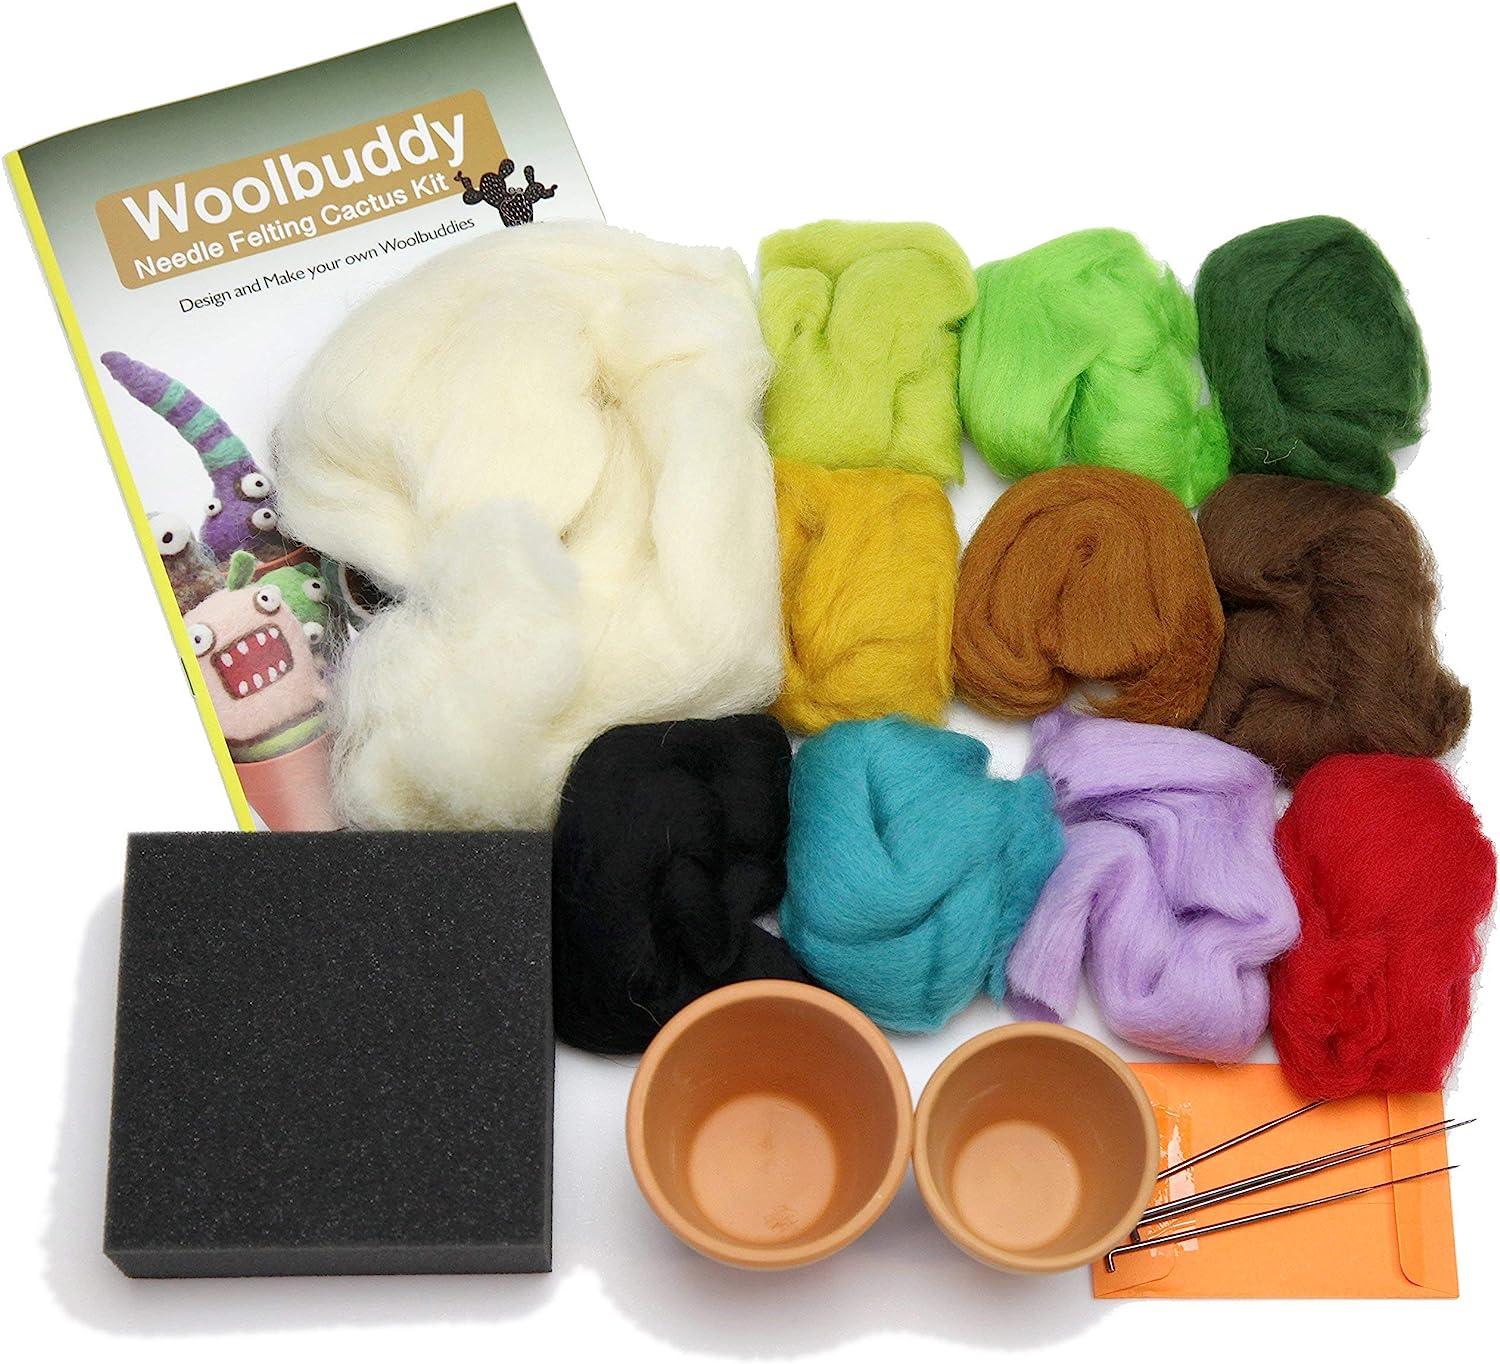 Woolbuddy Needle Felting Pad, Needle Felting Mat, Needle Felting Supplies, Foam Pad Alternative, Wool Felting Mat, Made of Felting Wool, for Needle